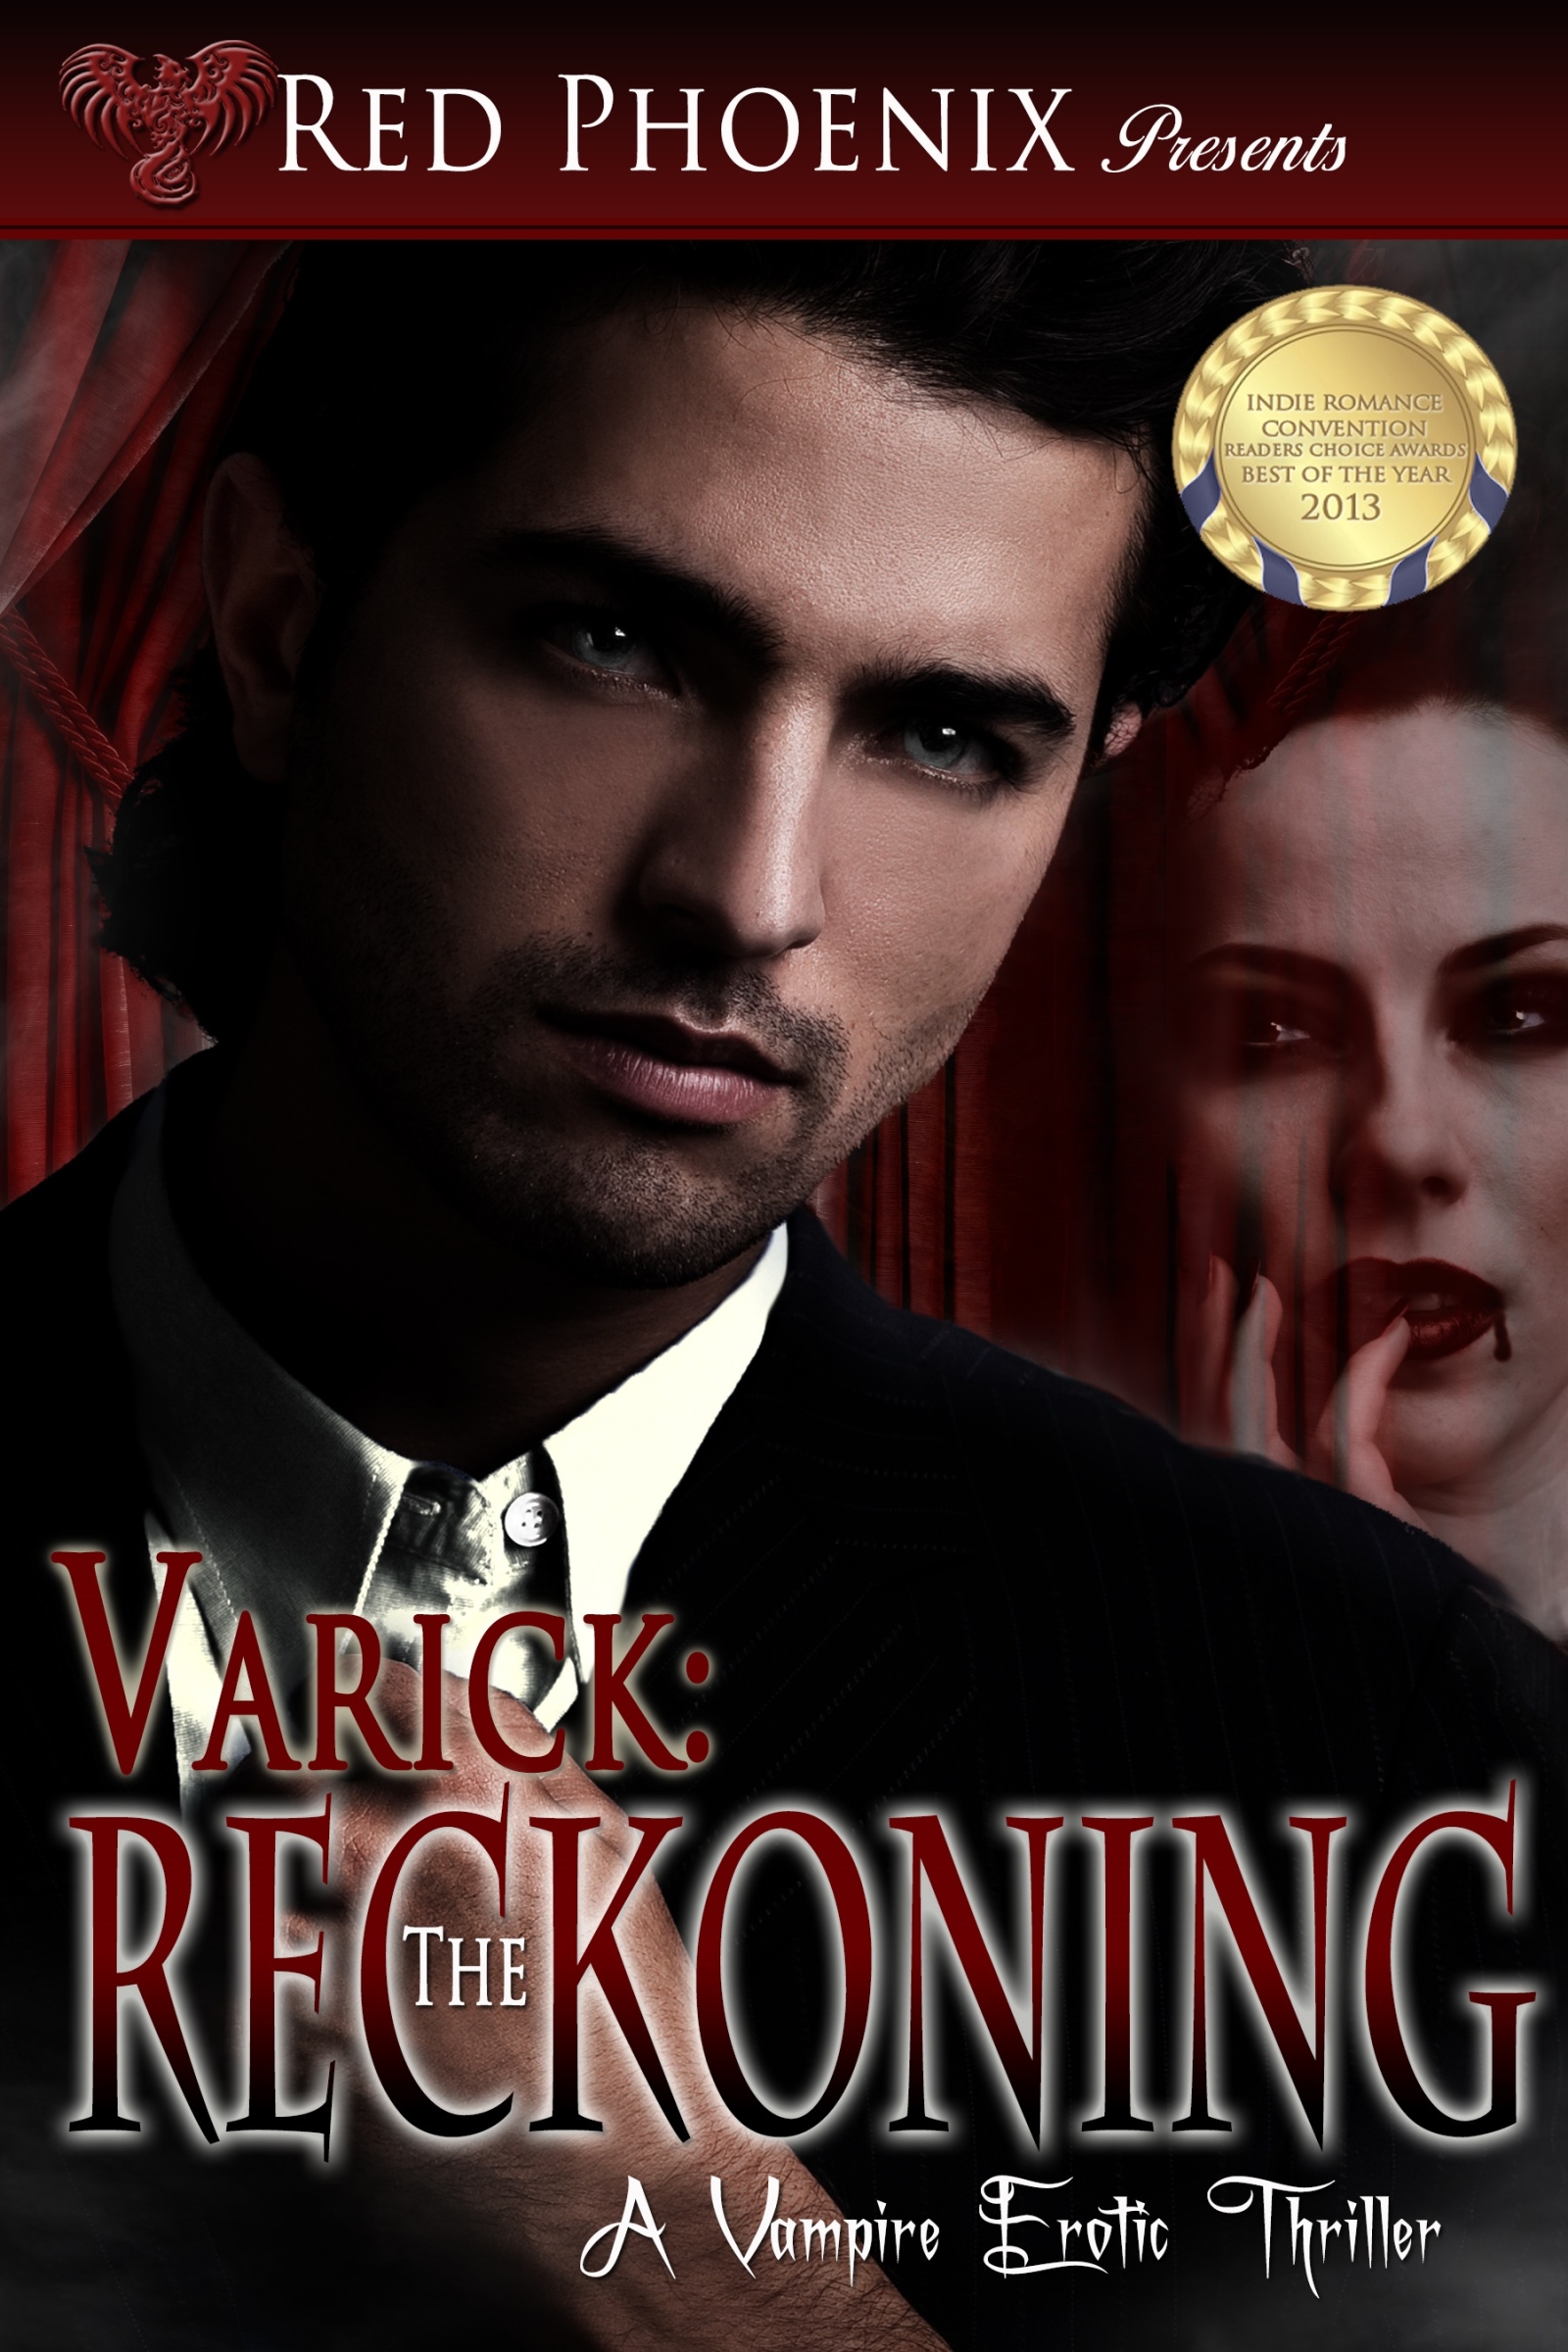 Varick: The Reckoning